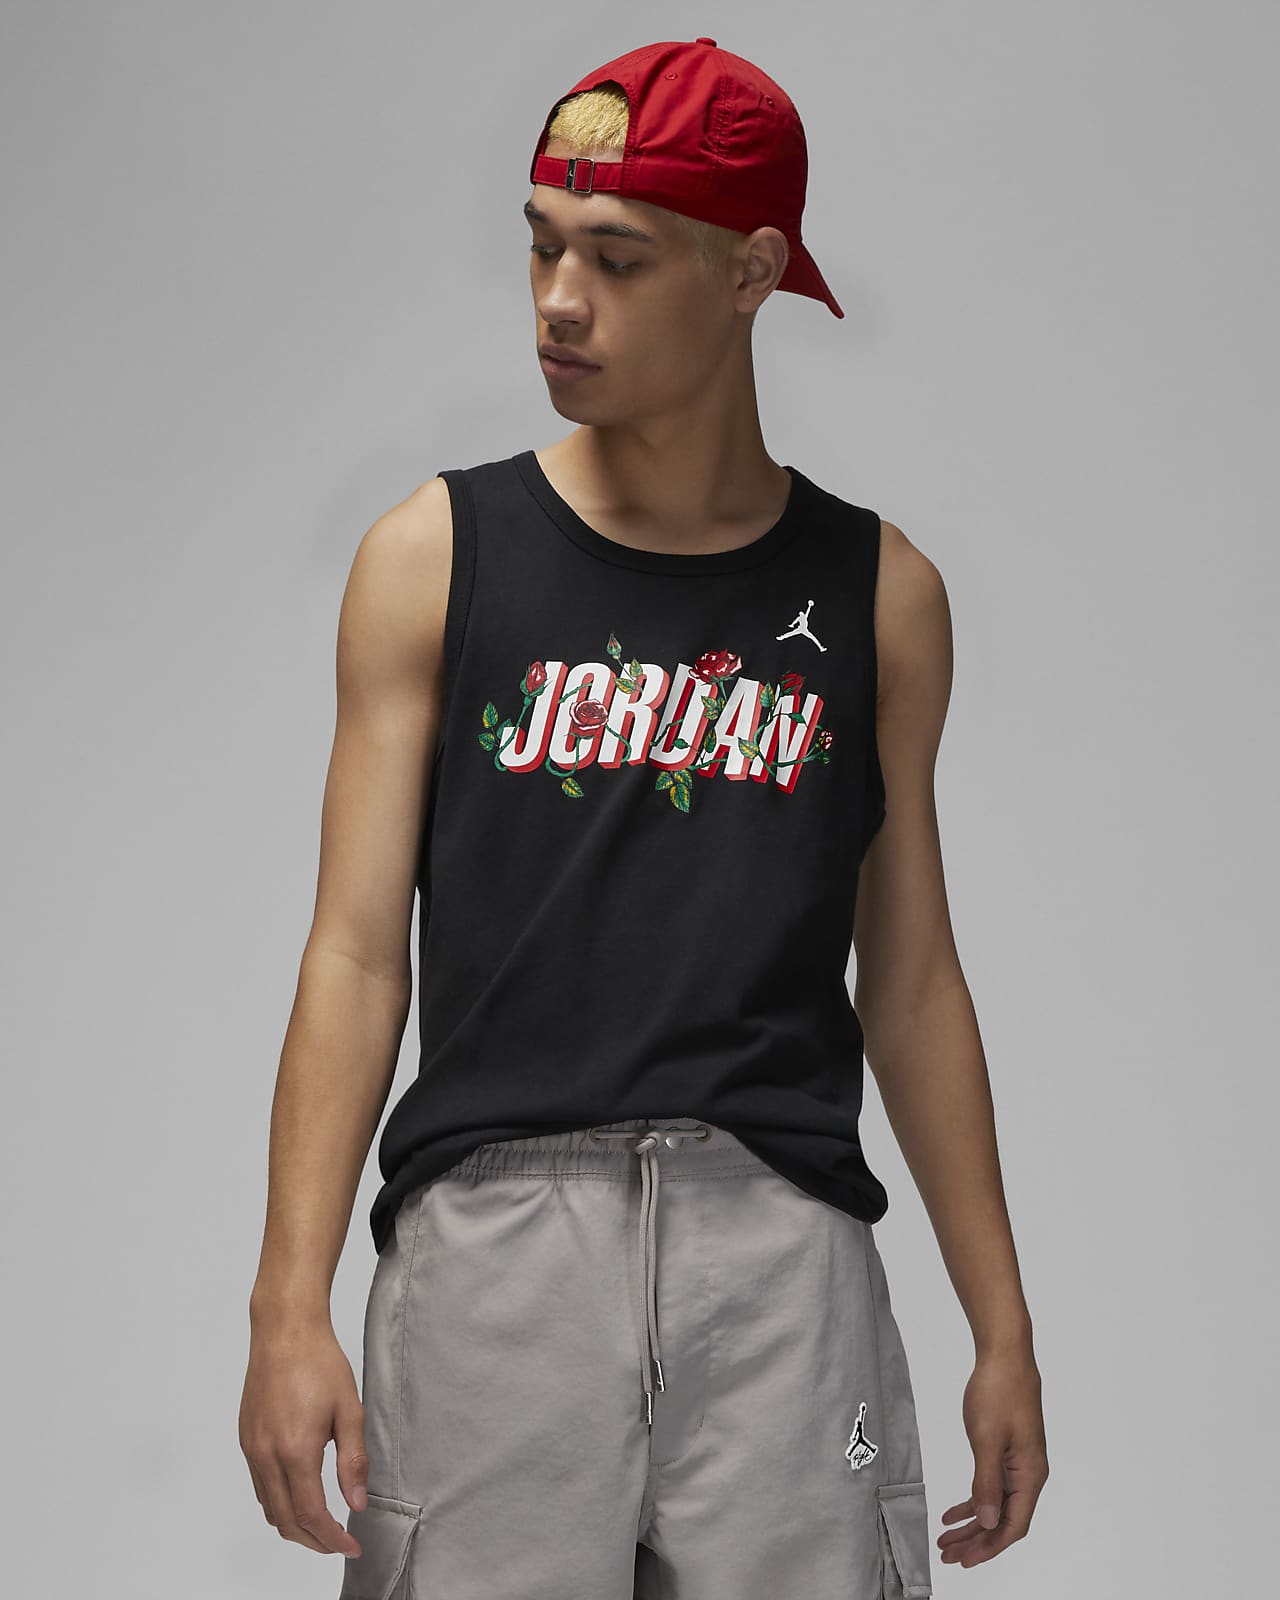 Jordan Brand Sorry Camiseta de tirantes - Hombre. Nike